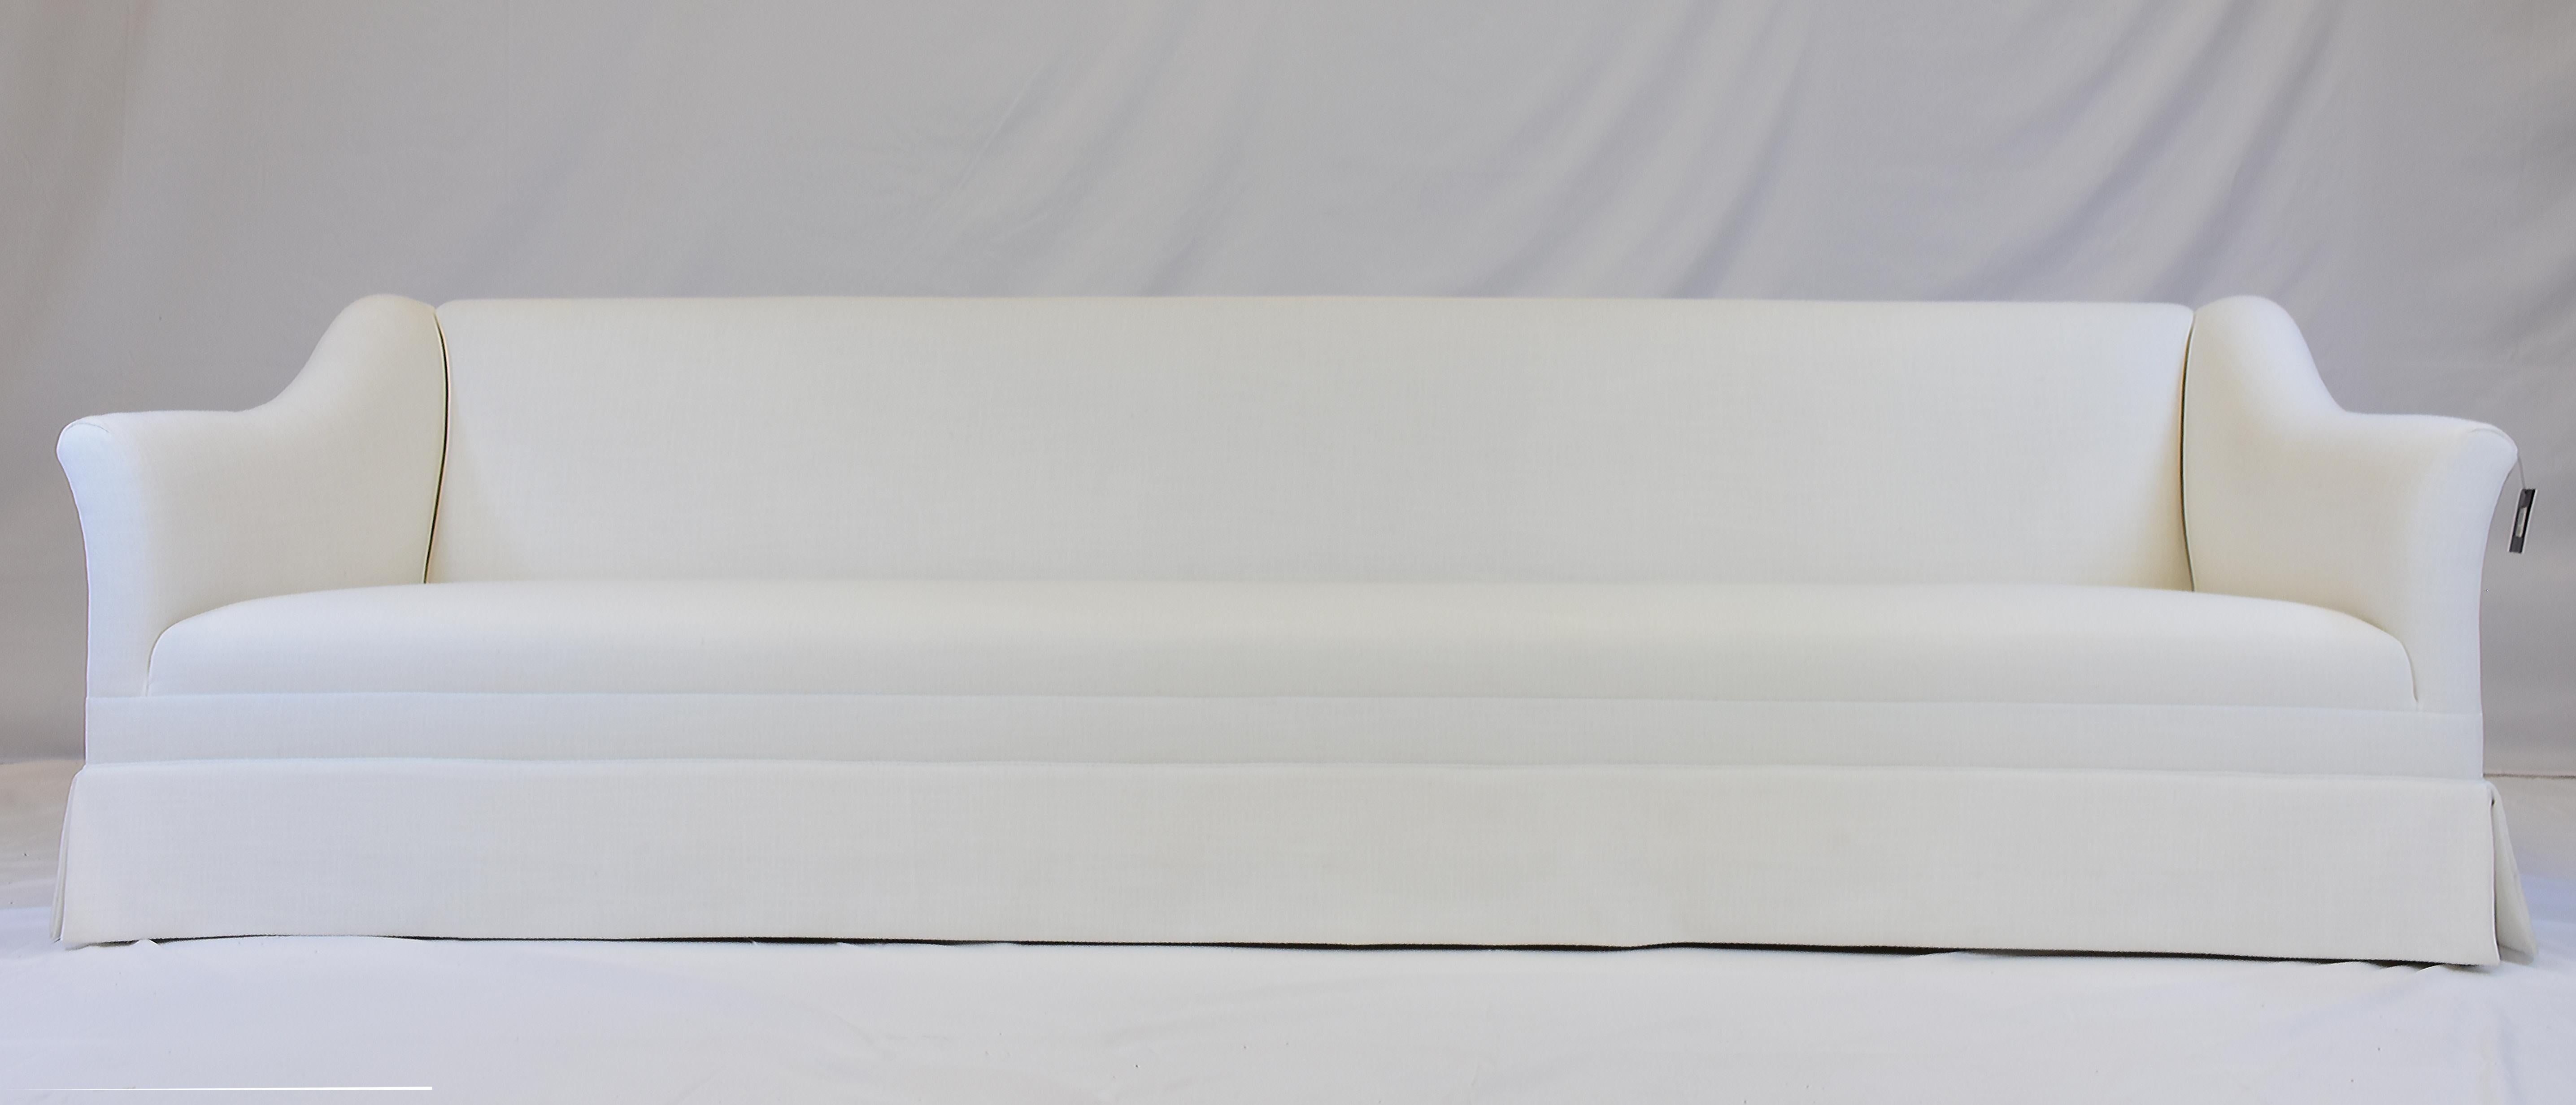 American Le Jeune Upholstery Lucca Sofa Showroom Model in White Linen